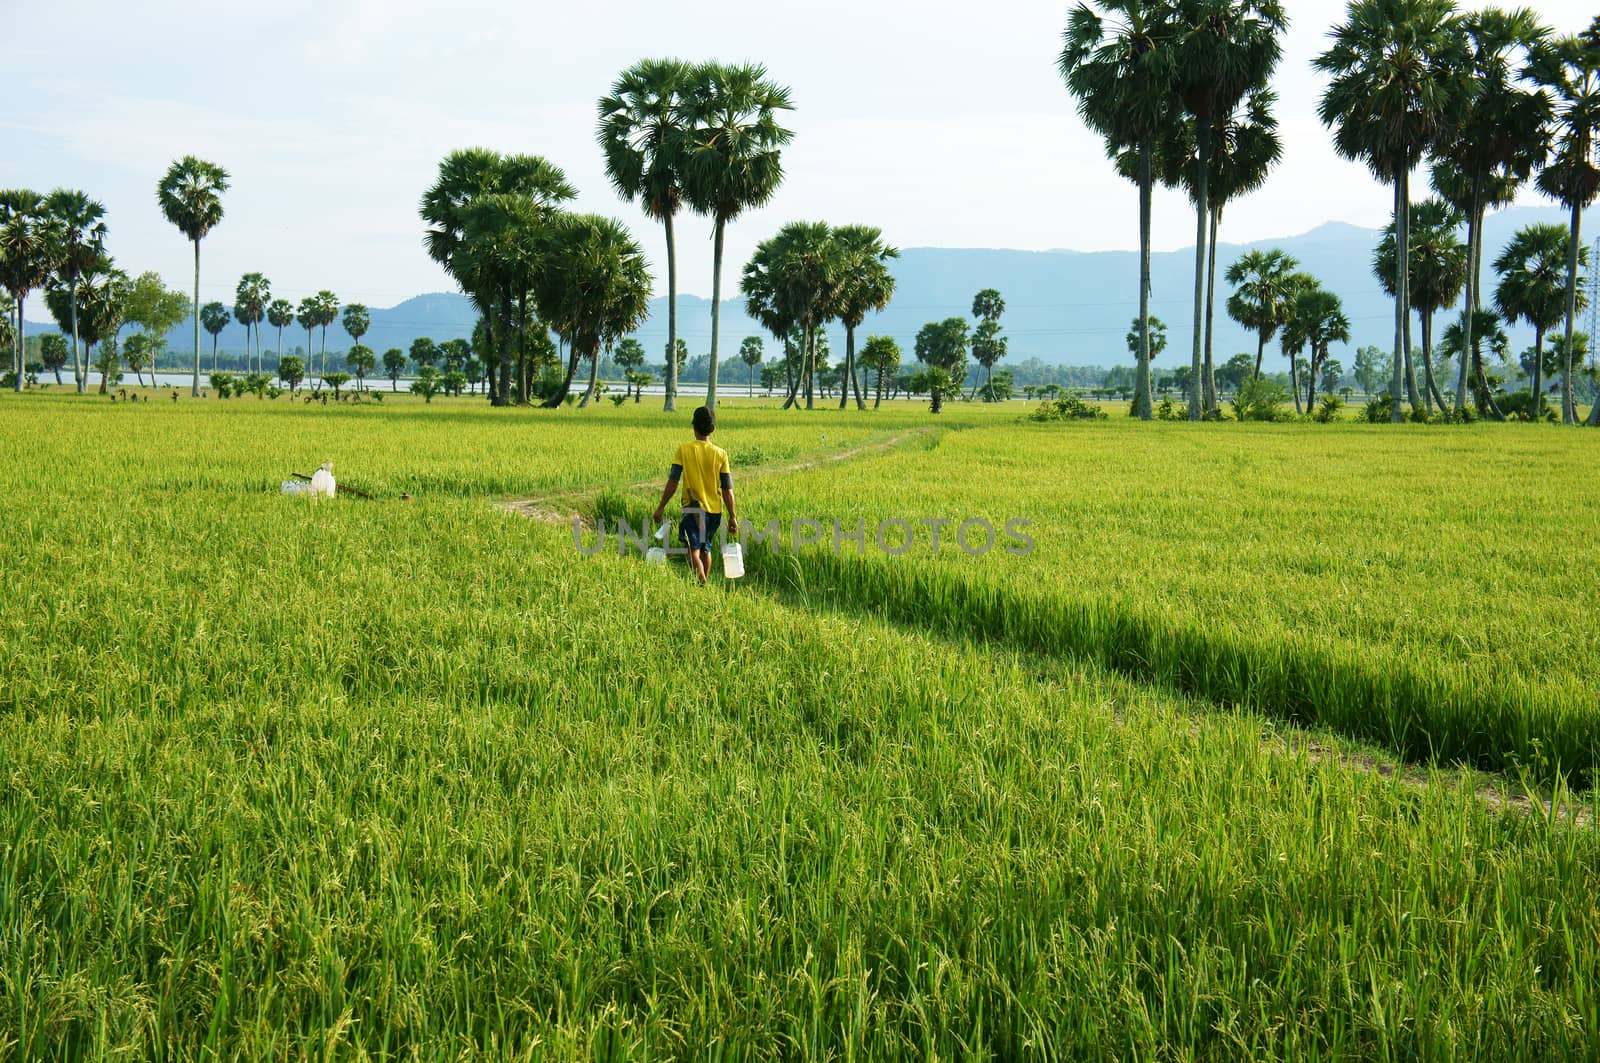 AN GIANG, VIET NAM- NOV 14: Farmer walking on the path between green rice field in An Giang, Viet Nam on Nov 14, 2013